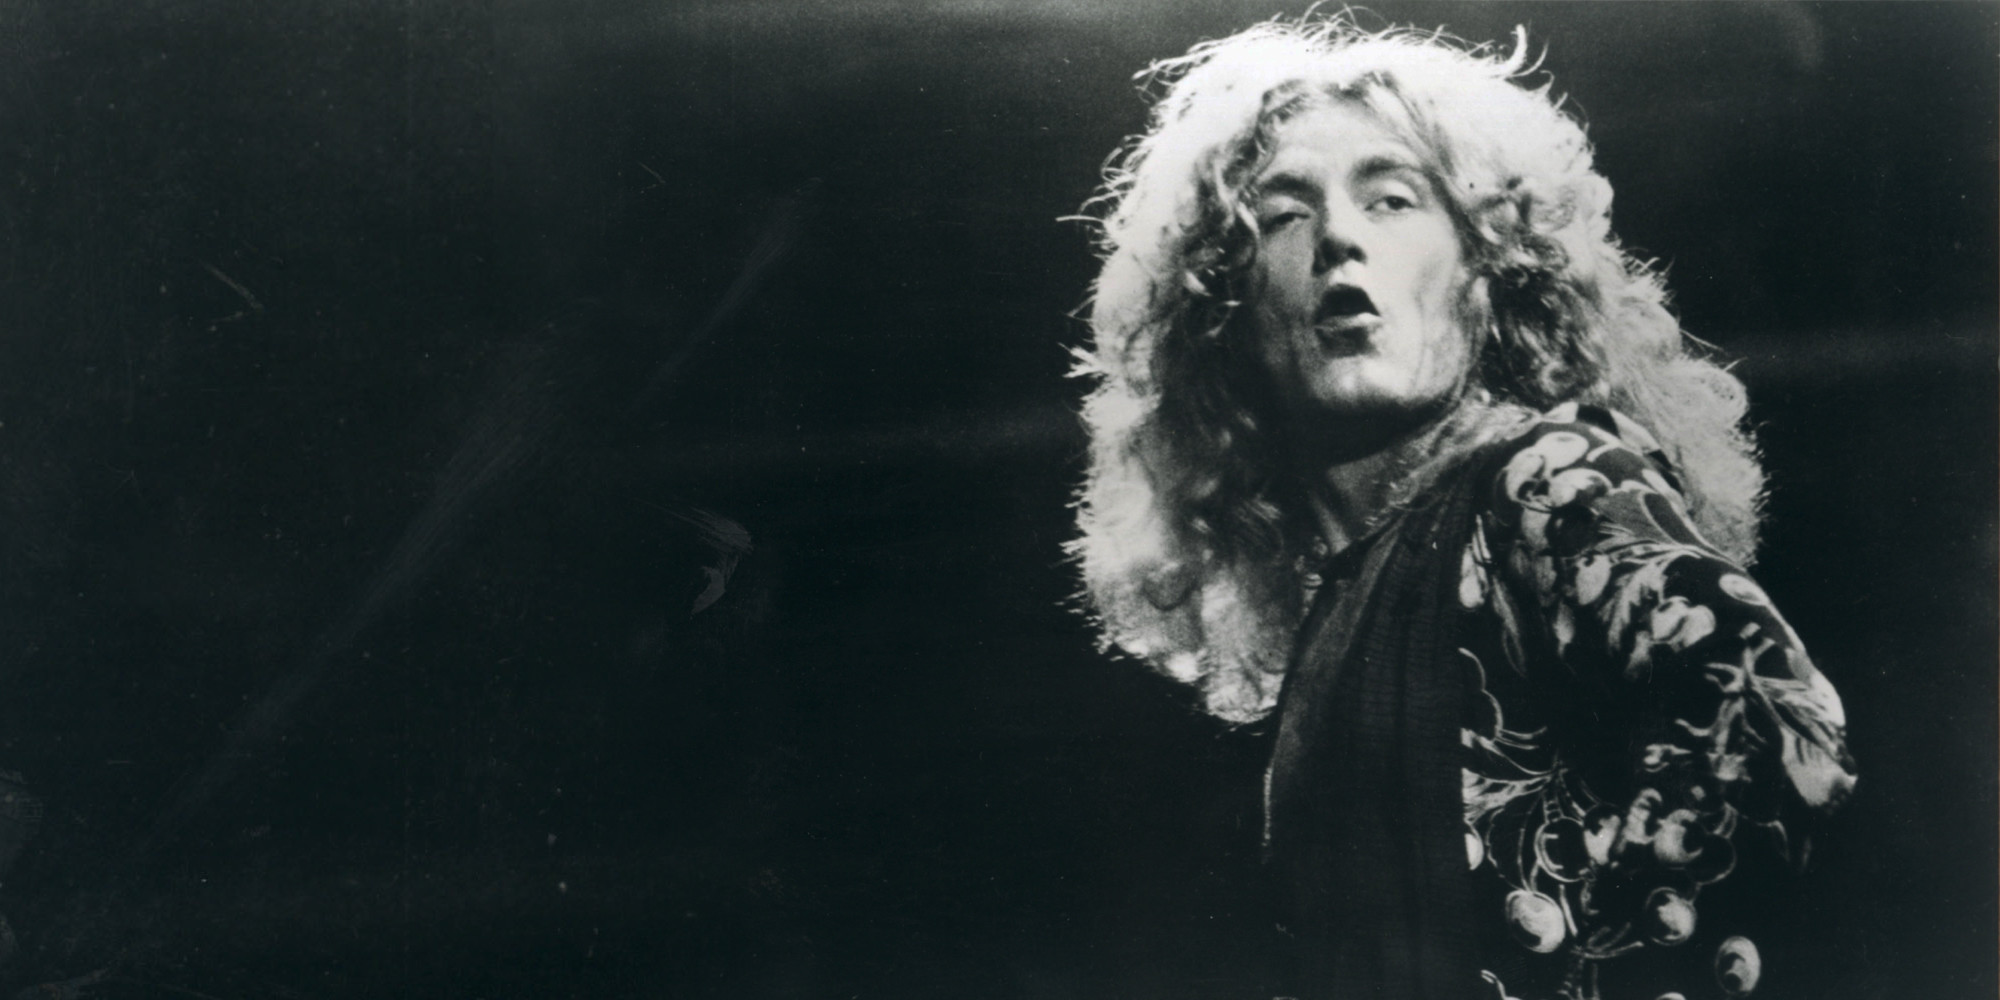 Robert Plant #24